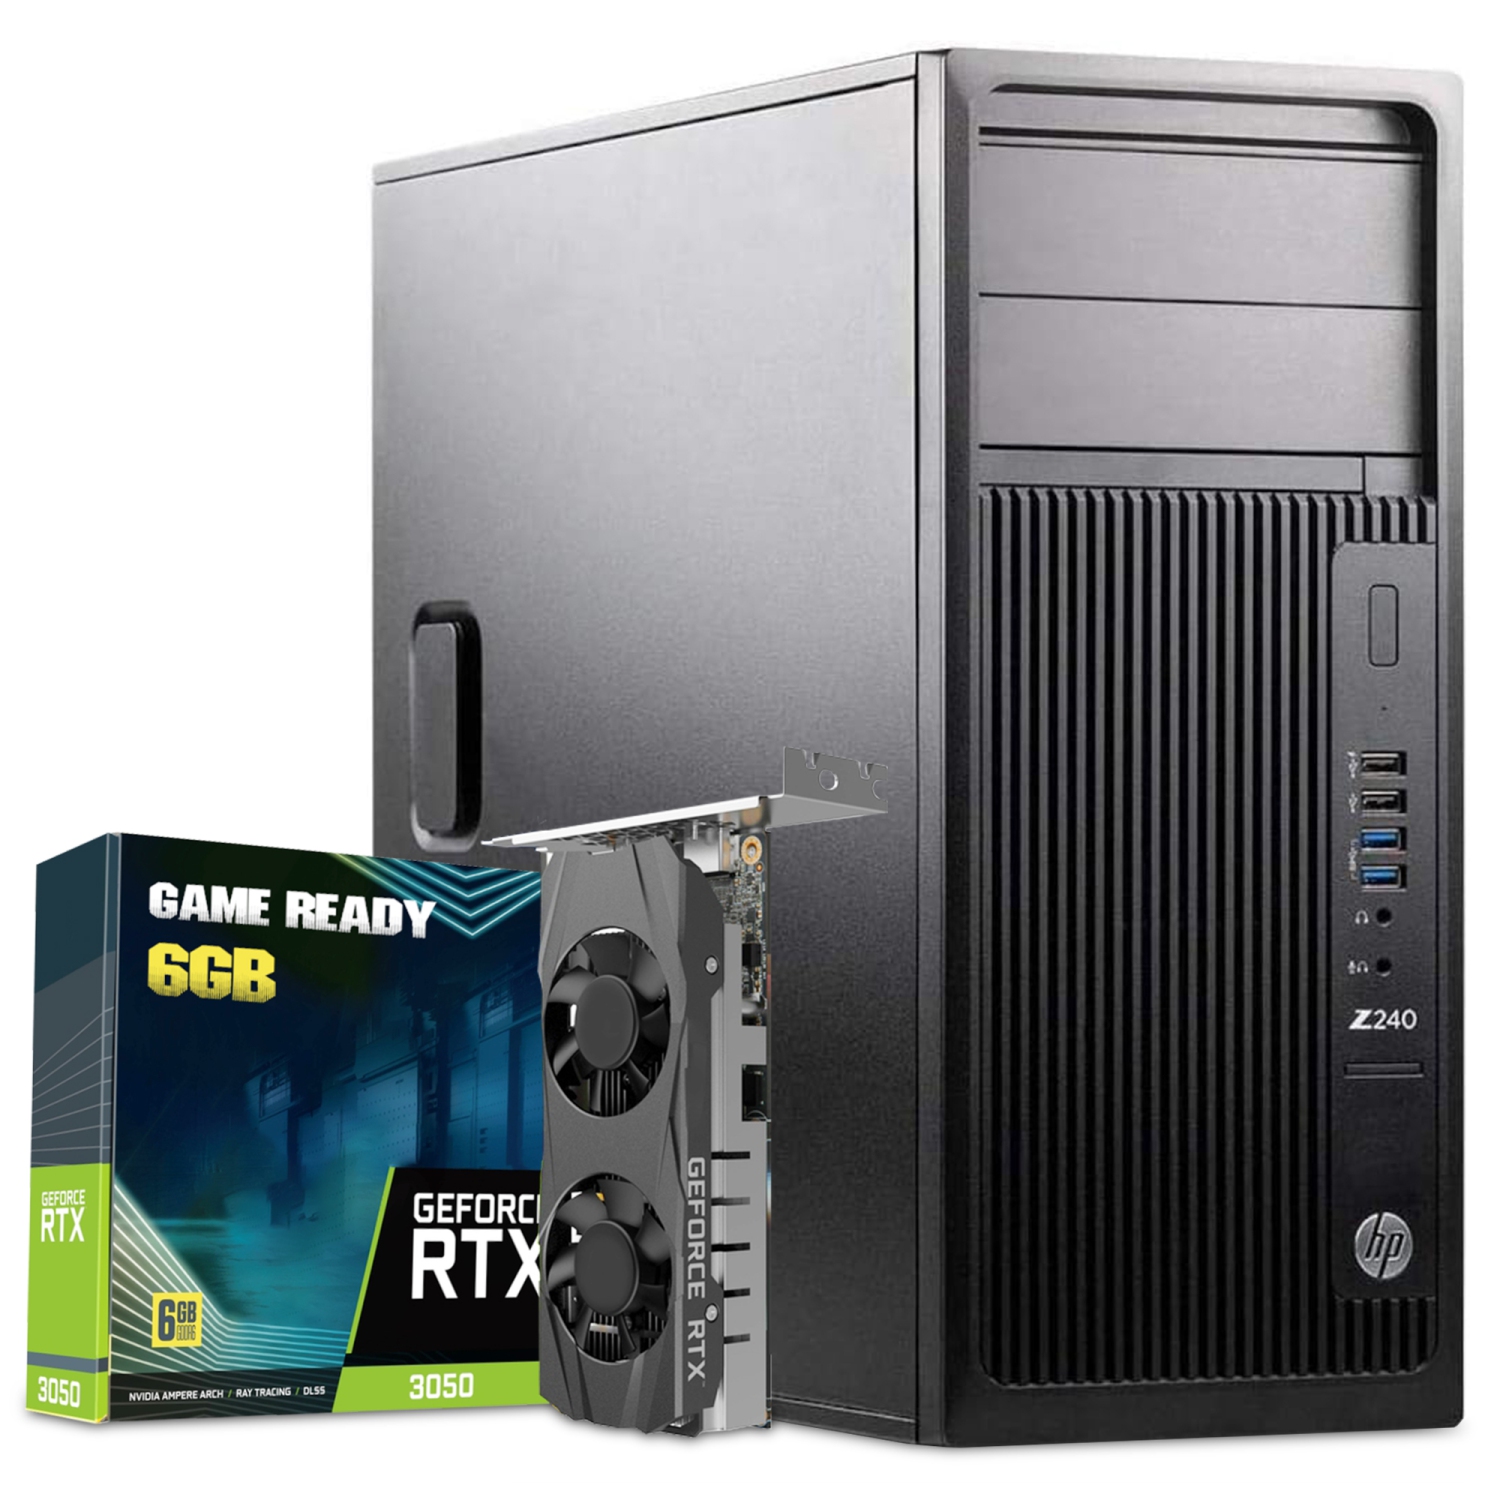 Refurbished (Good) - Gaming PC HP Z240 Workstation Desktop Computer, GeForce RTX 3050 6GB GDDR6 HDMI, Intel Core i7 Processor, 16GB DDR4 RAM, 1TB SSD, 2TB HDD, Windows 10 Pro, WIFI